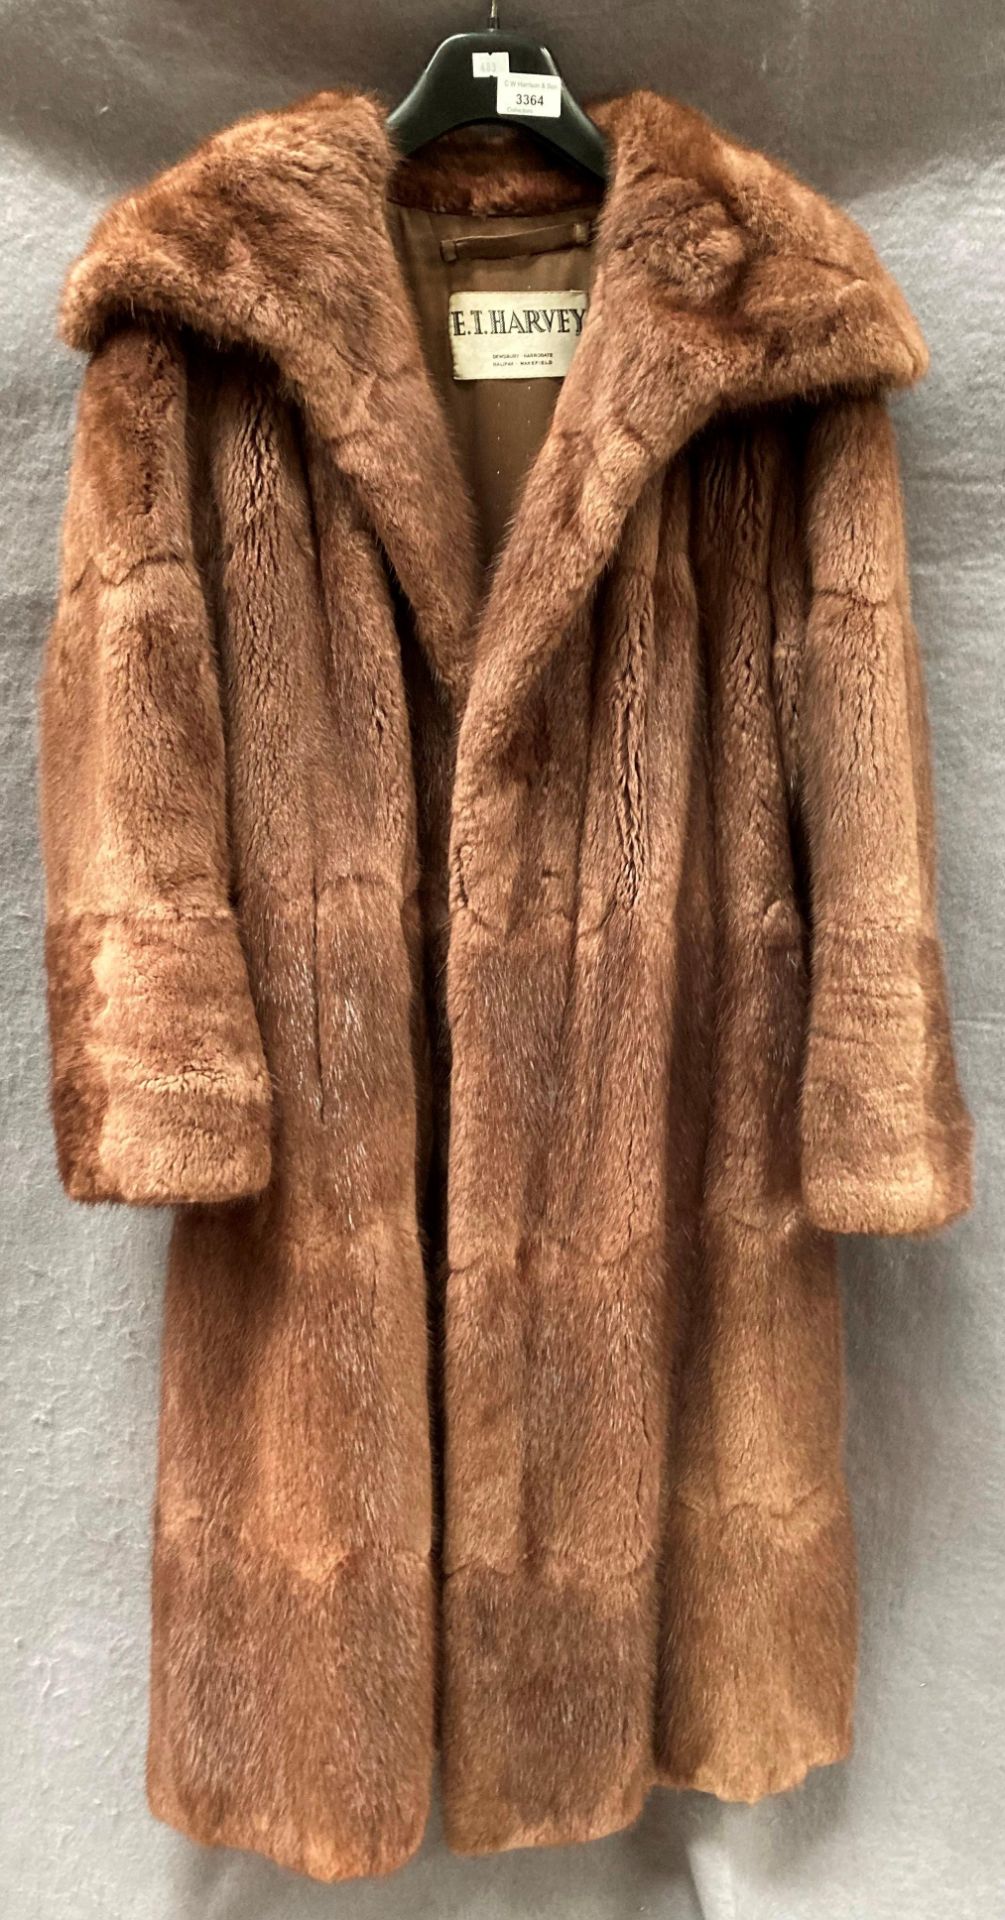 E T Harvey Ltd light brown fur long coat Further Information Staining to both lapels